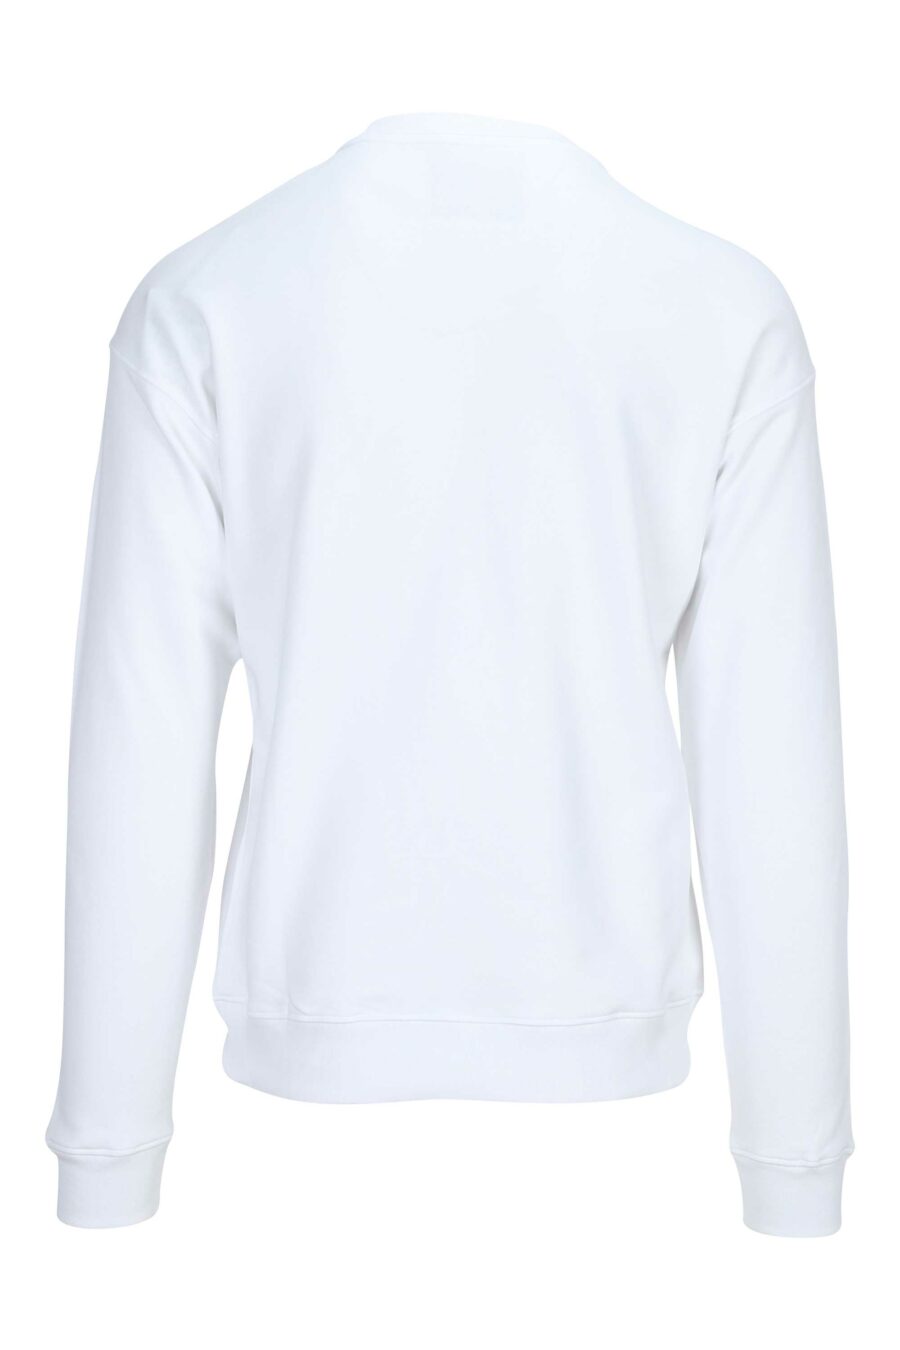 Weißes Sweatshirt mit schwarzem Gürtel maxilogo - 889316947632 1